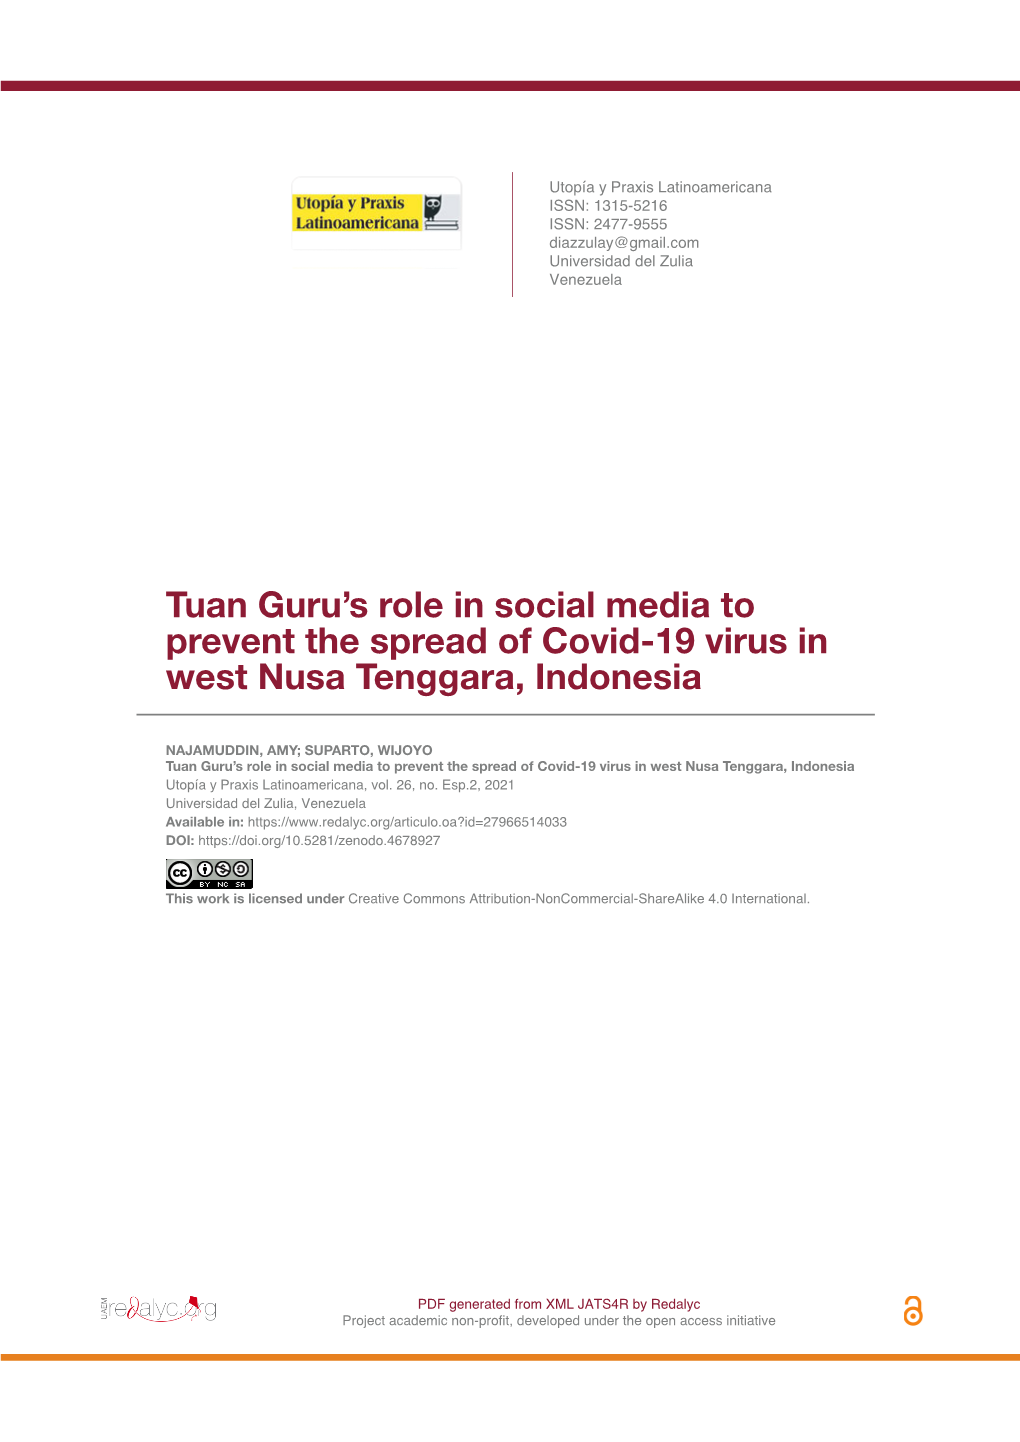 Tuan Guru's Role in Social Media to Prevent the Spread of Covid-19 Virus in West Nusa Tenggara, Indonesia